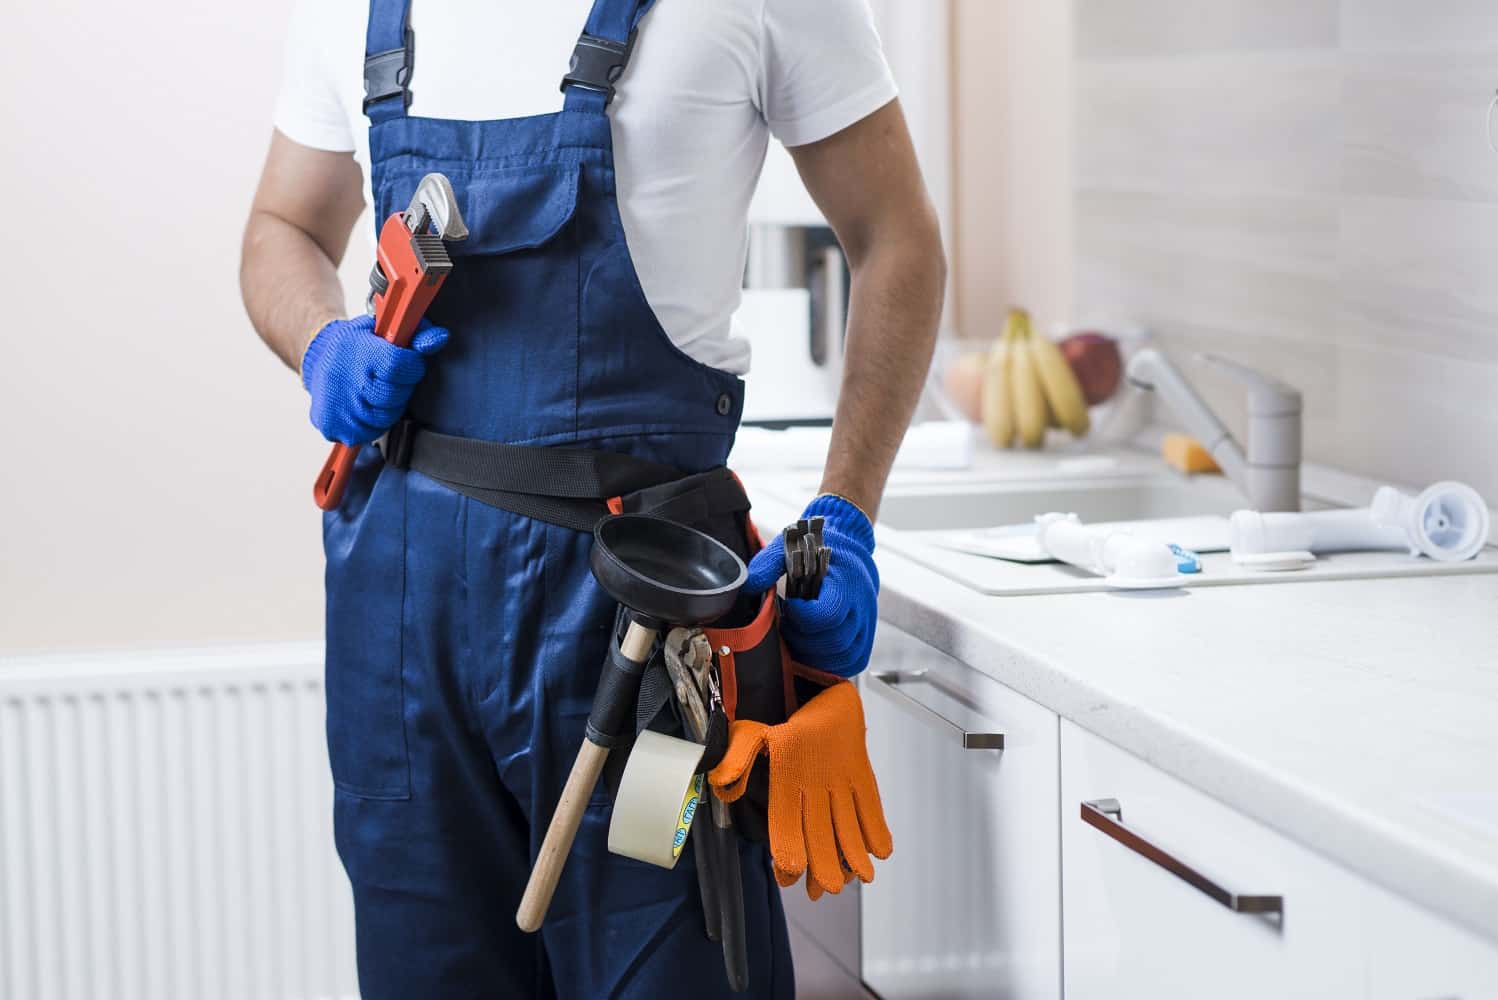 Hiring an emergency plumber costs 4